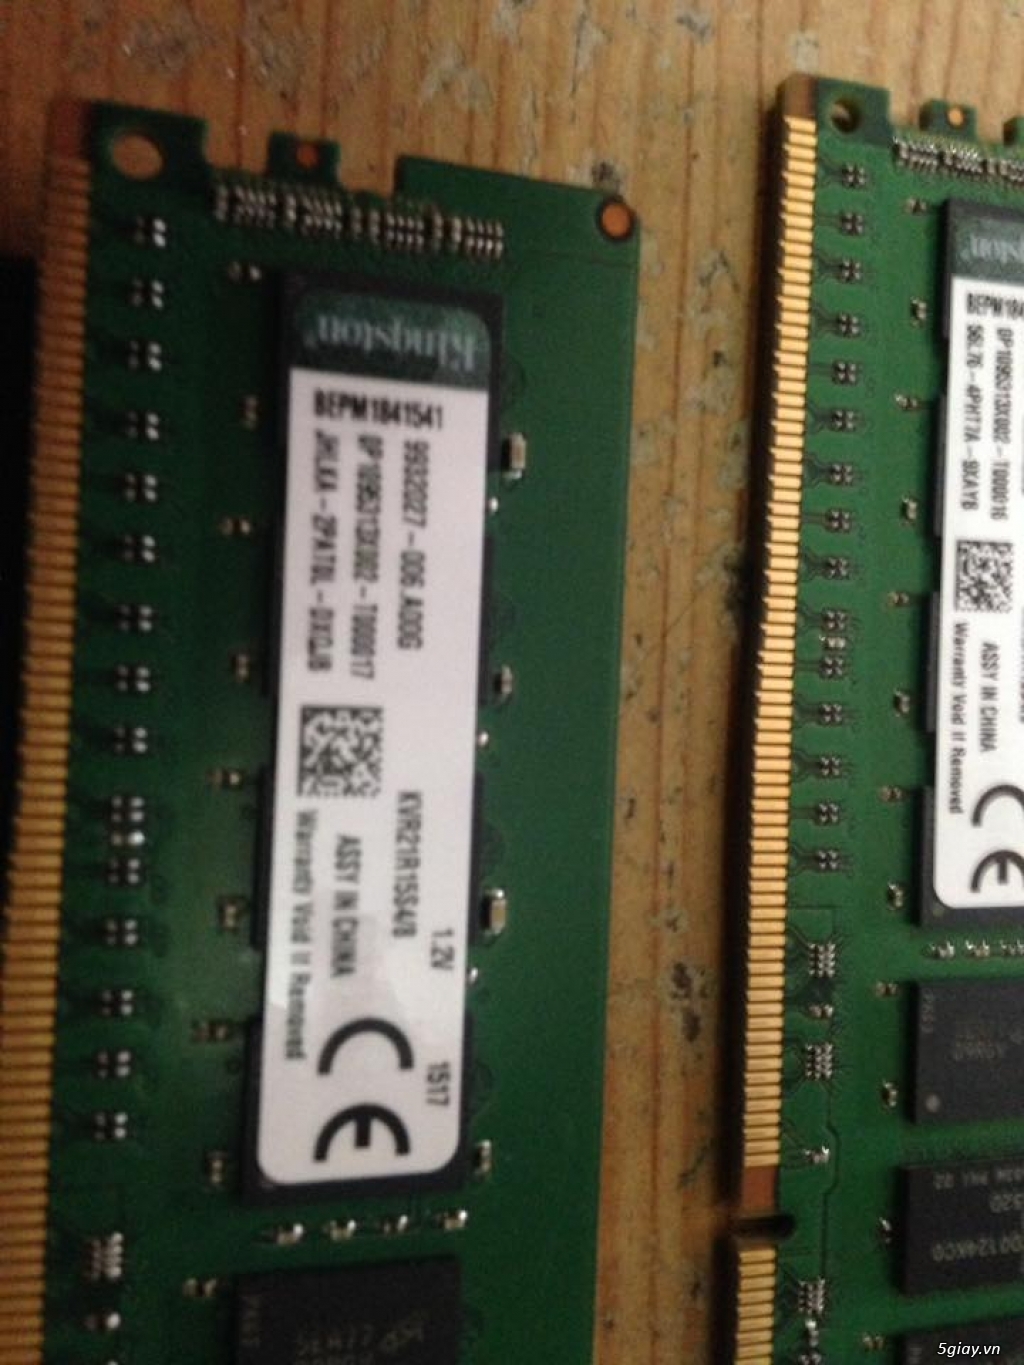 Bán cặp ram DDR4 8G Kingston ECC và 1 SSD Samsung 500G Evo 850 SataIII - 1